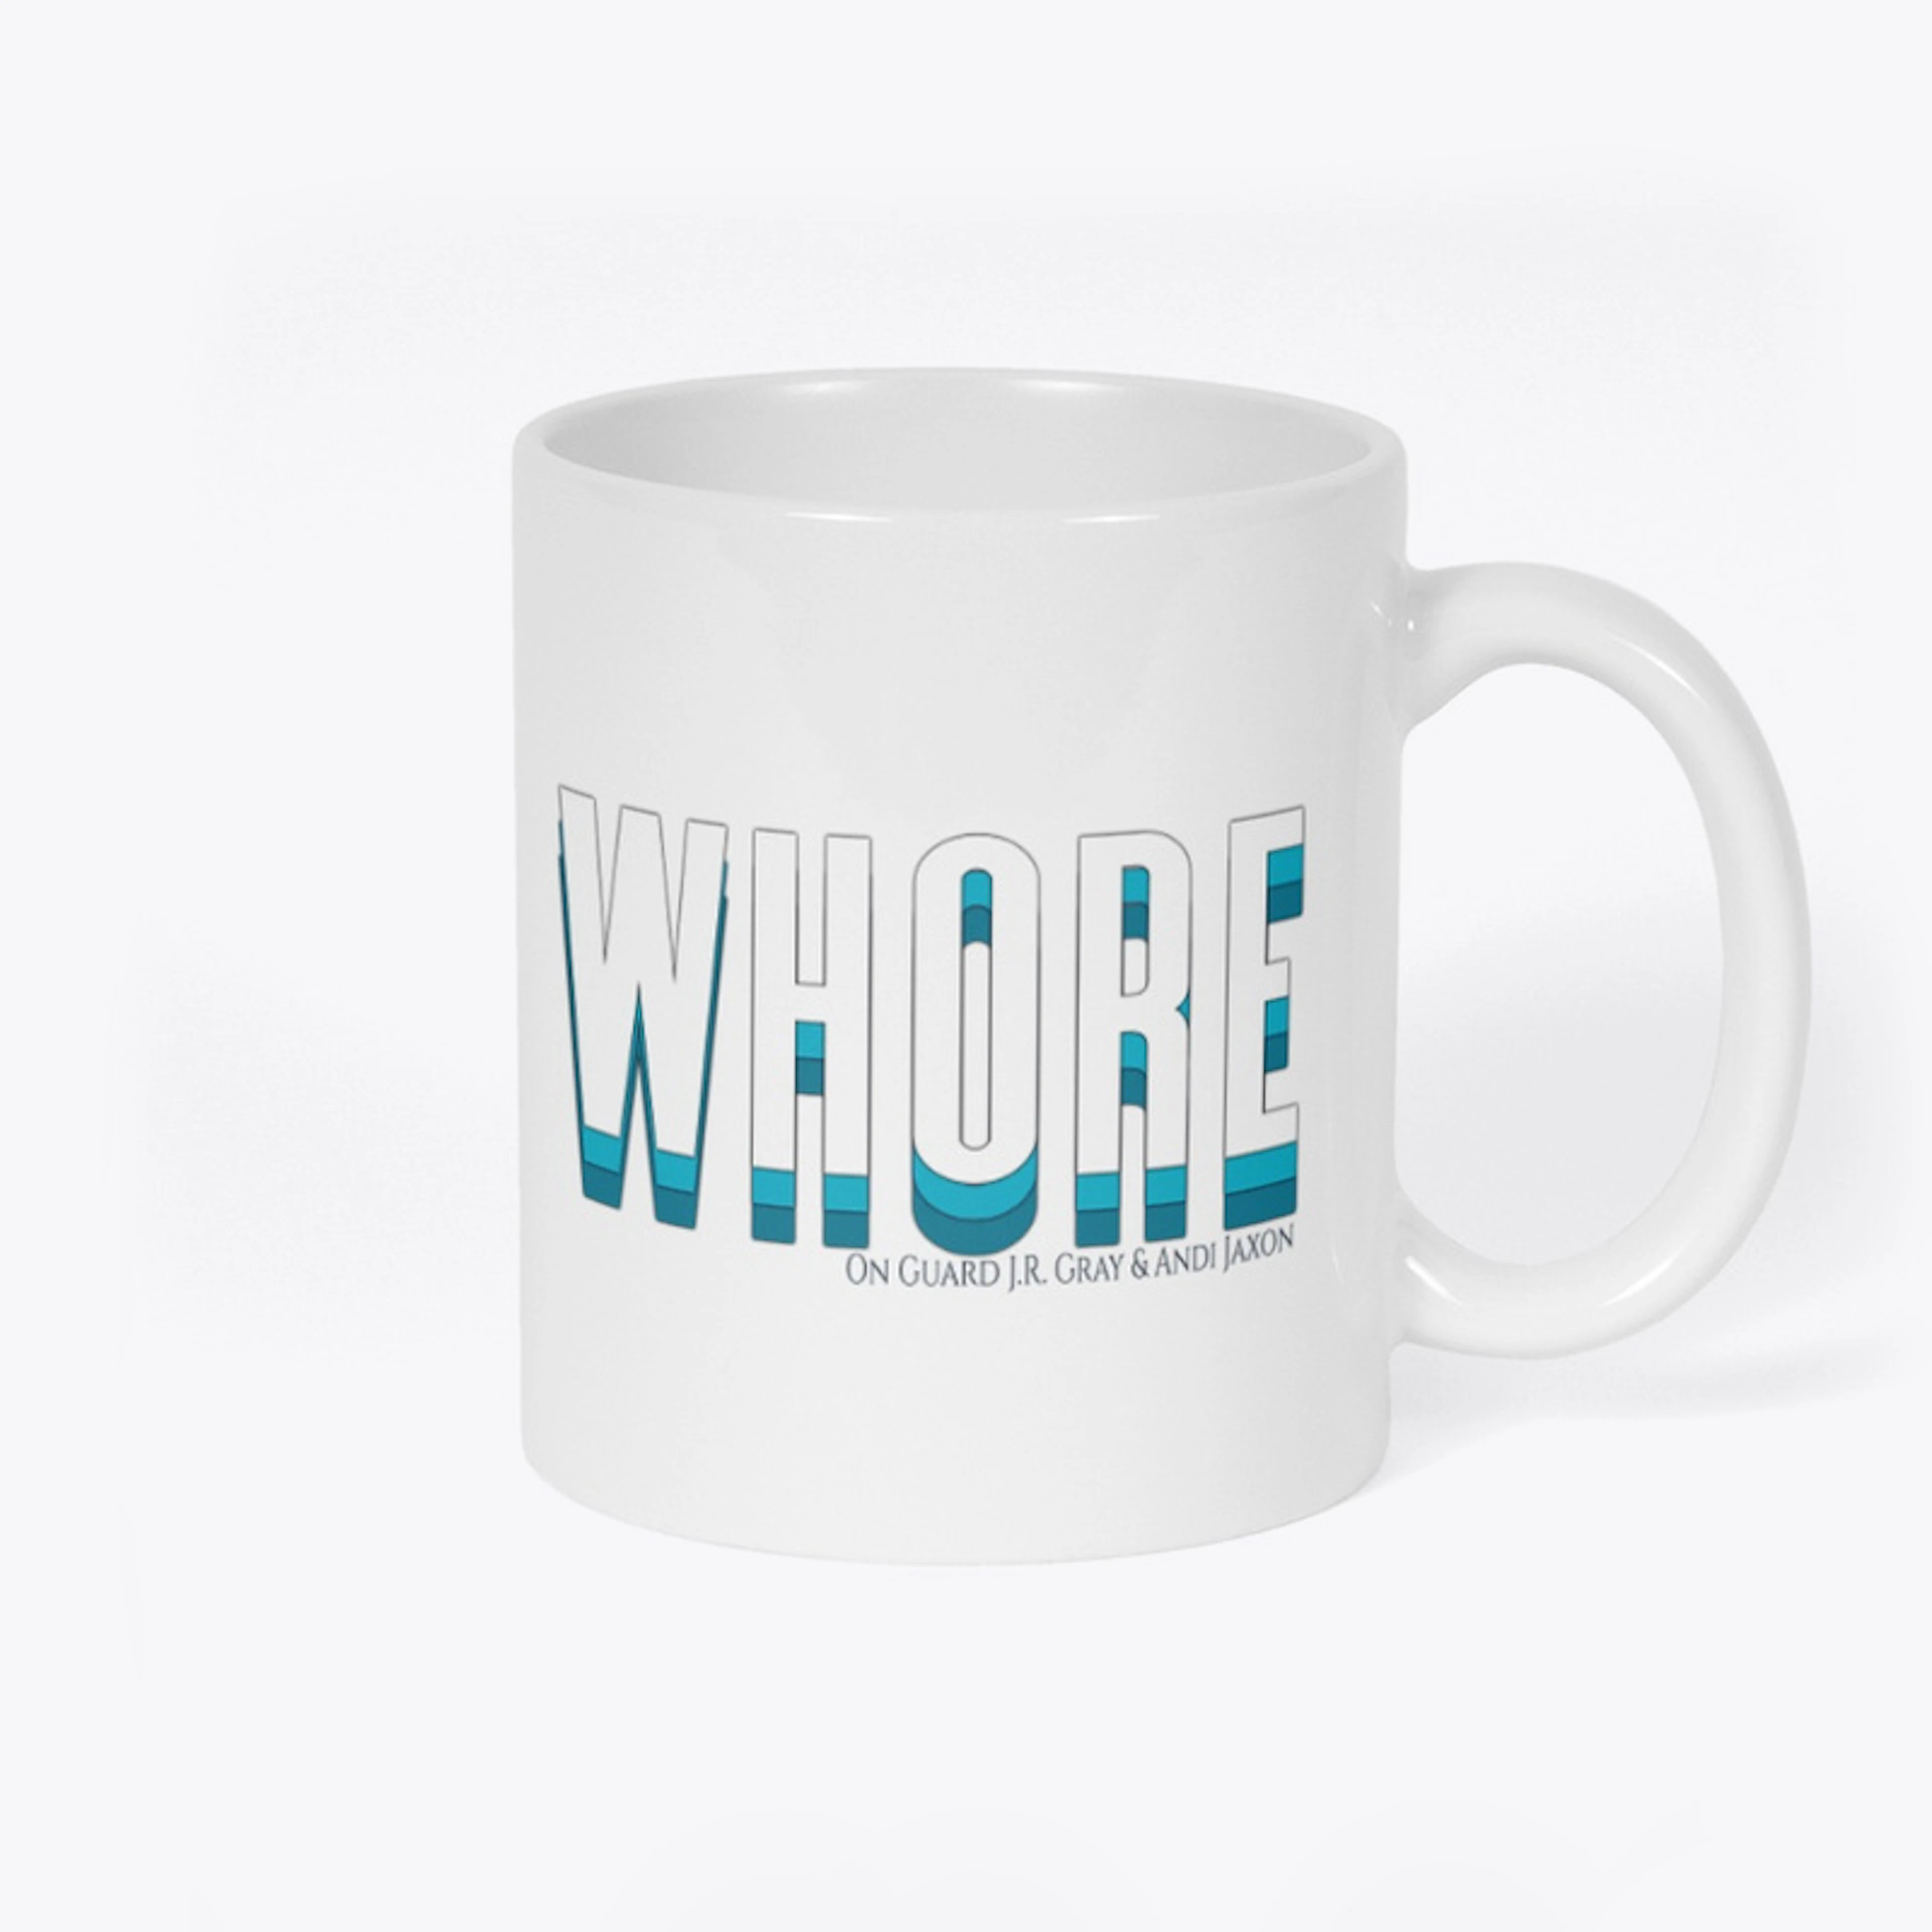 Whore Mug